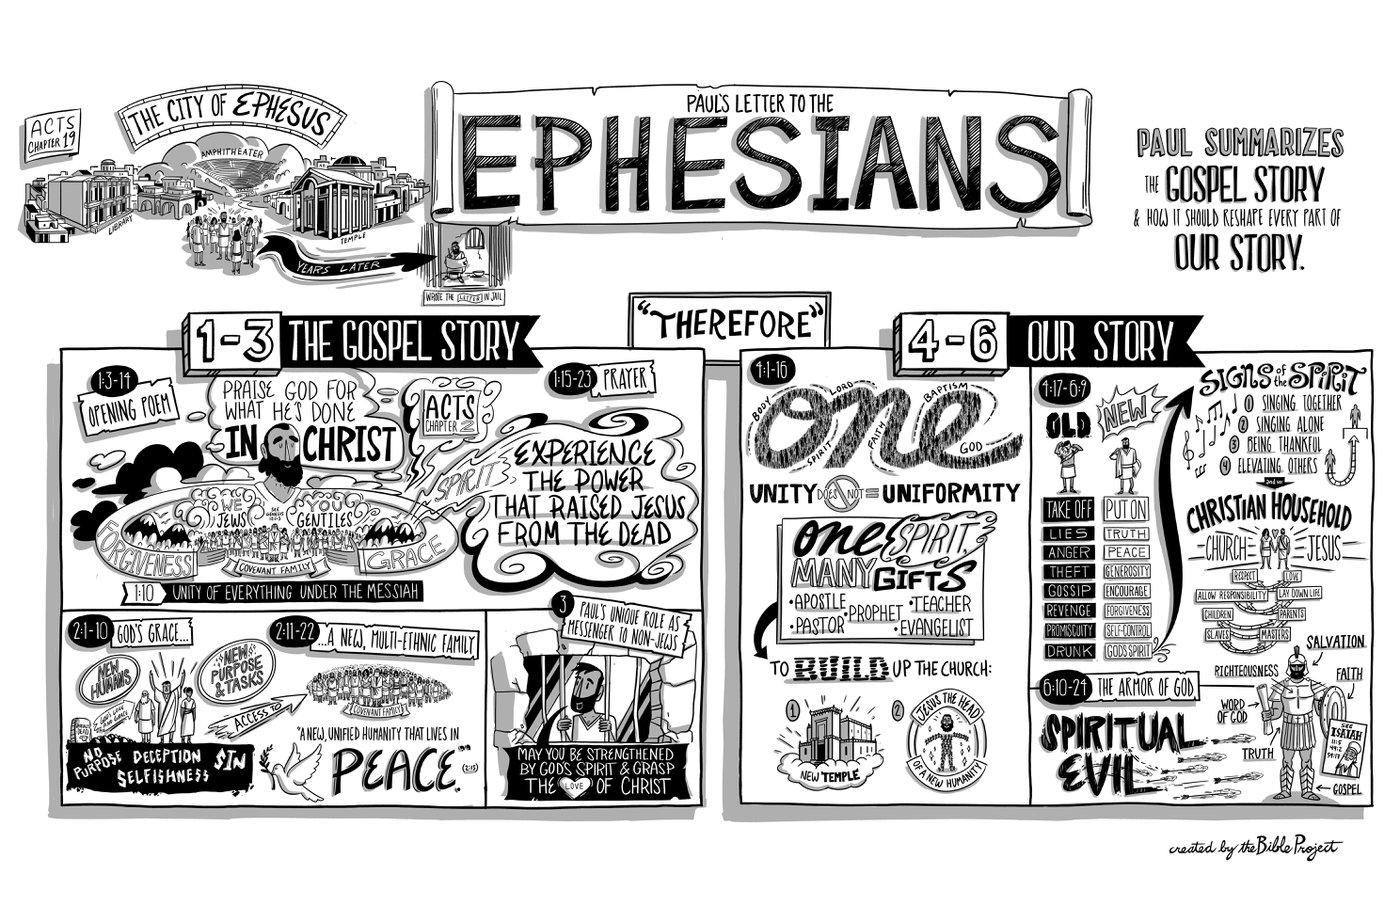 Overview of Ephesians